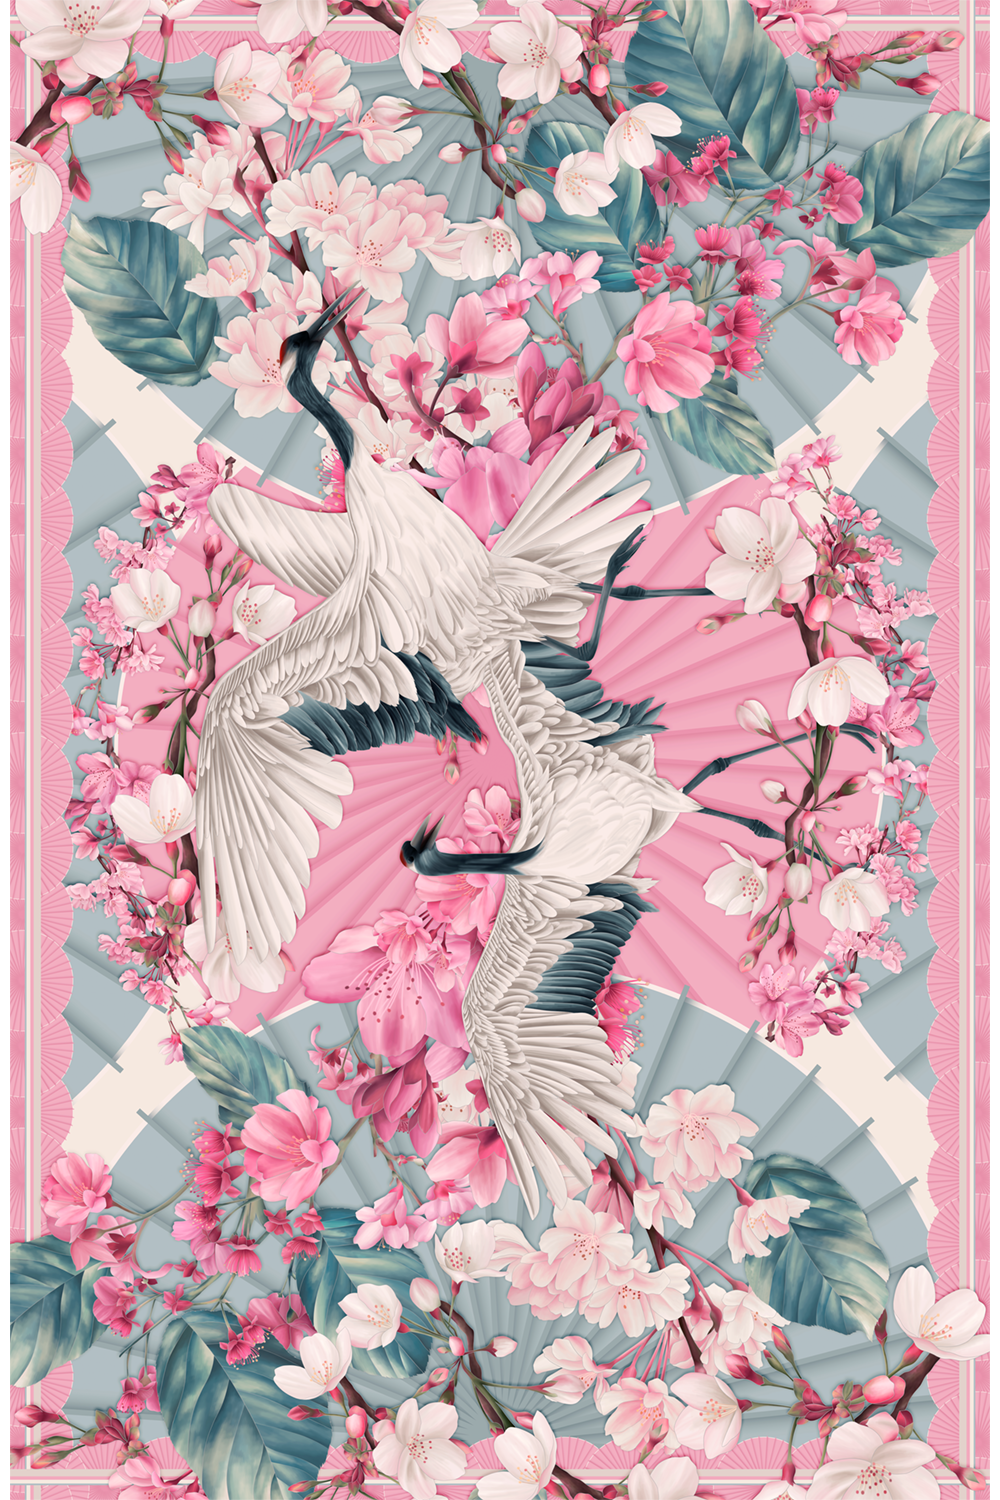 Panneau Grou Benevolence in polyester georgette | 130x200cm